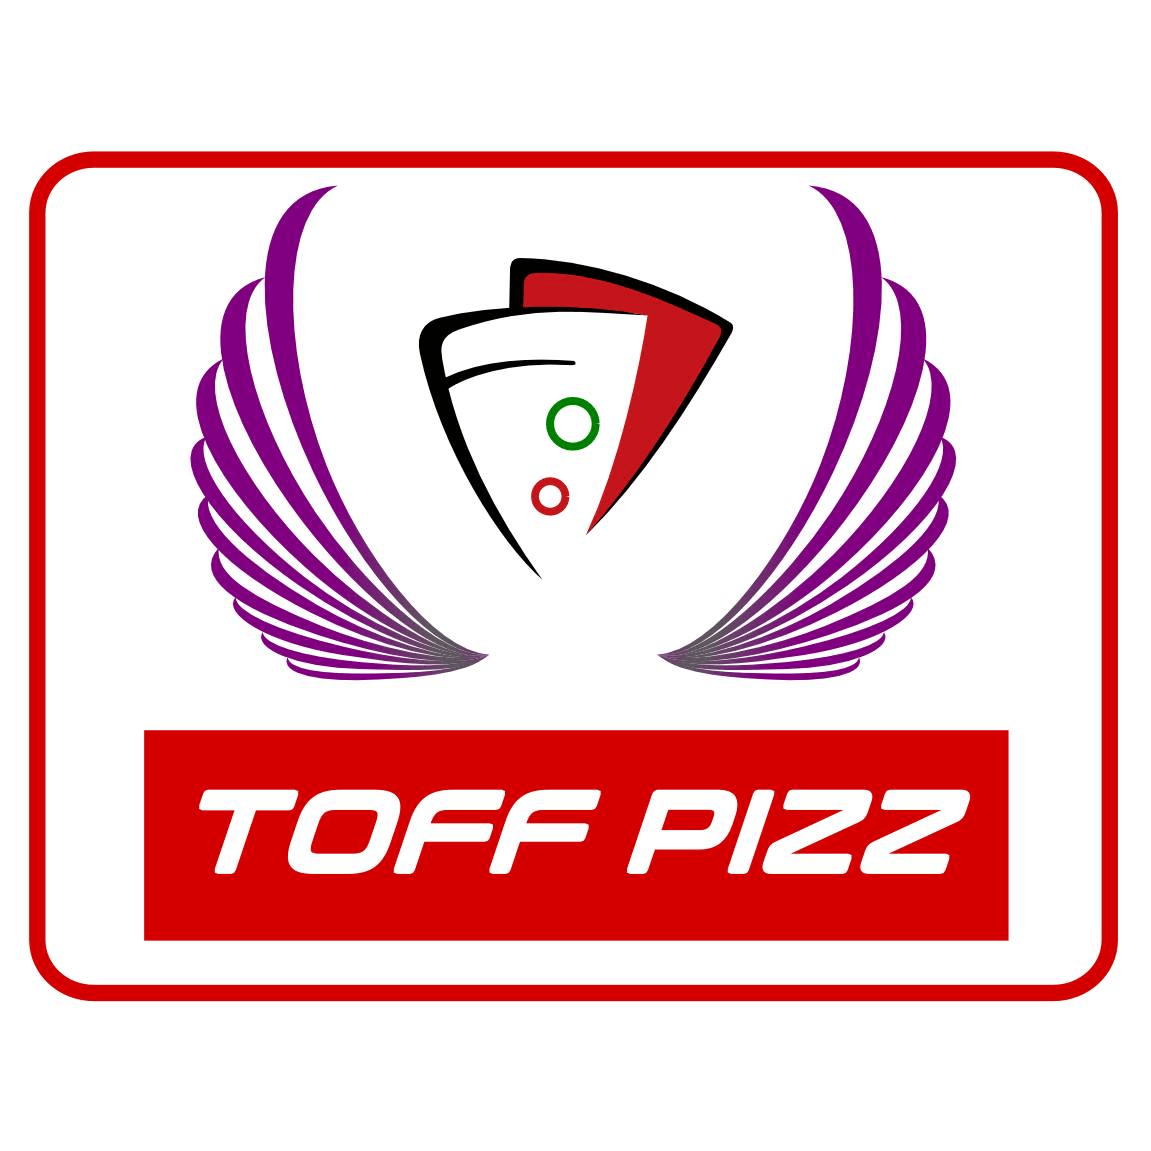 Toff Pizz